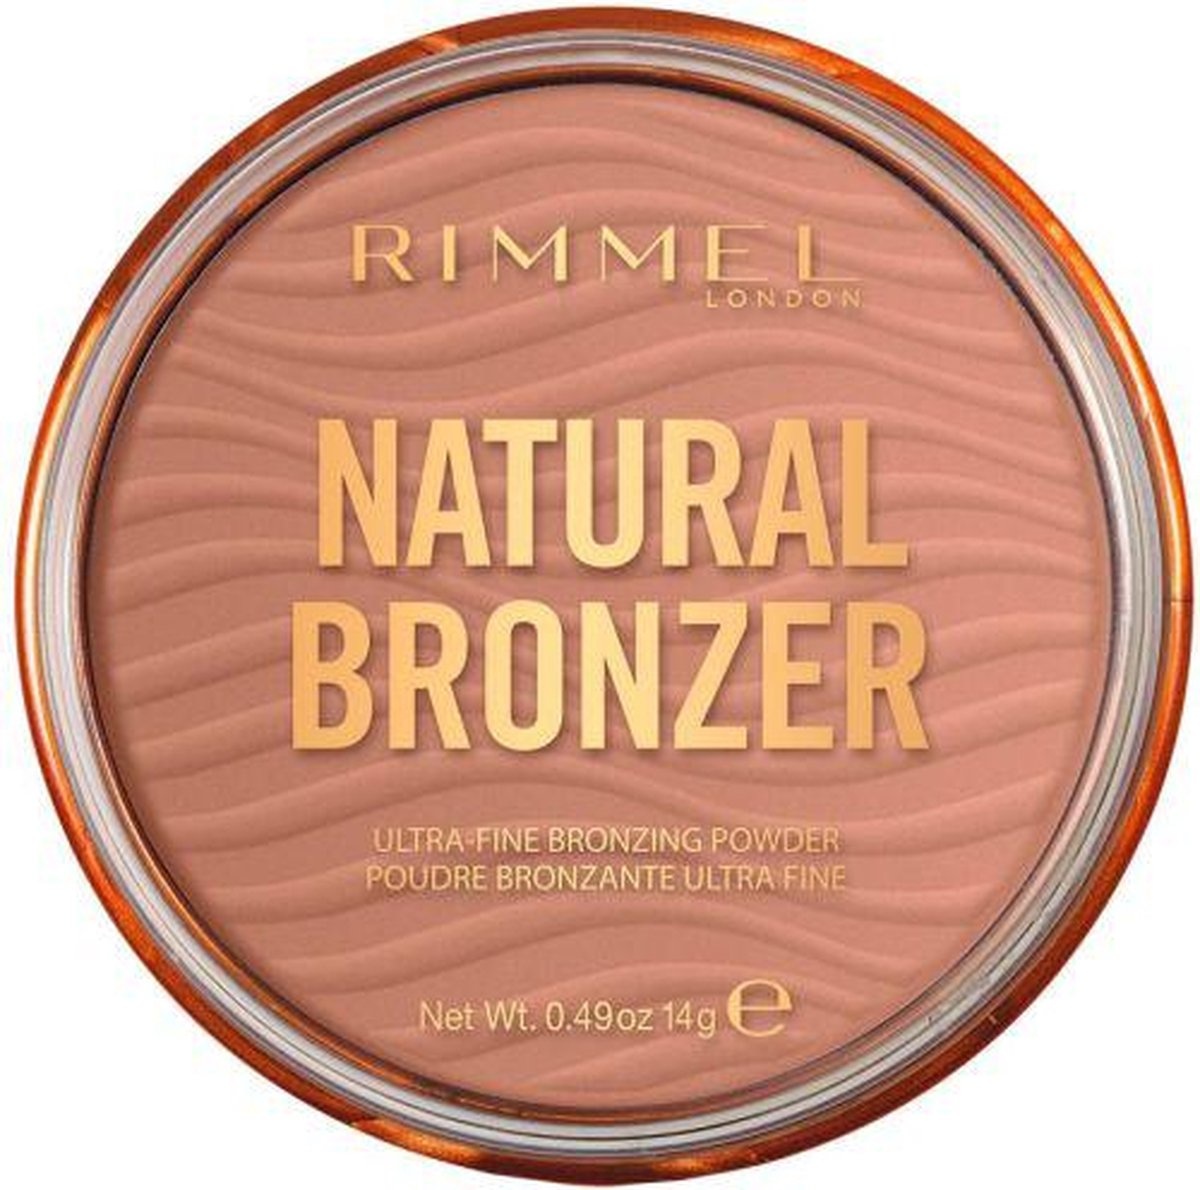 Rimmel London Natural Bronzer Poudre bronzante ultra-fine - 003 Sunset